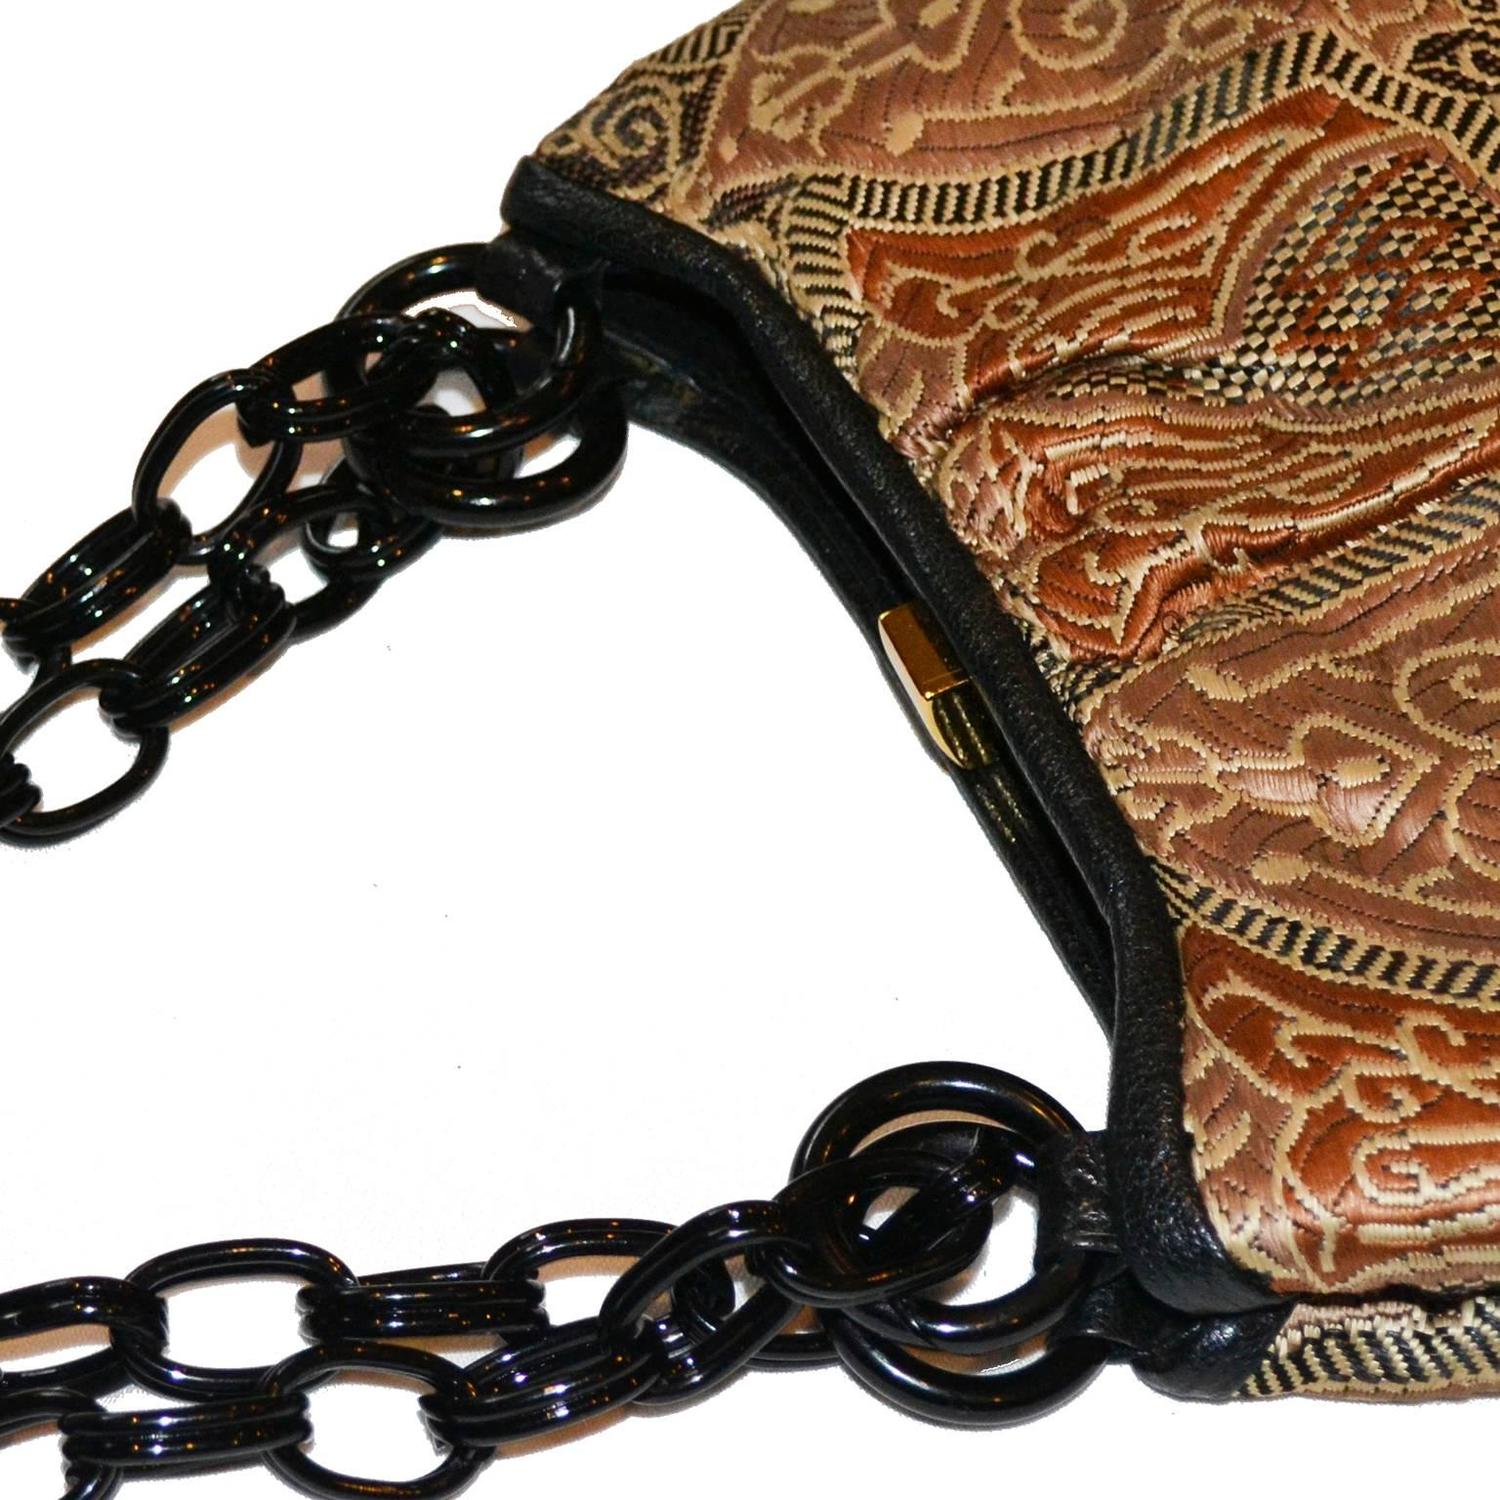 Koret Rare Vintage Handbag Chunky Black Chain Link Strap Unique Print For Sale at 1stdibs